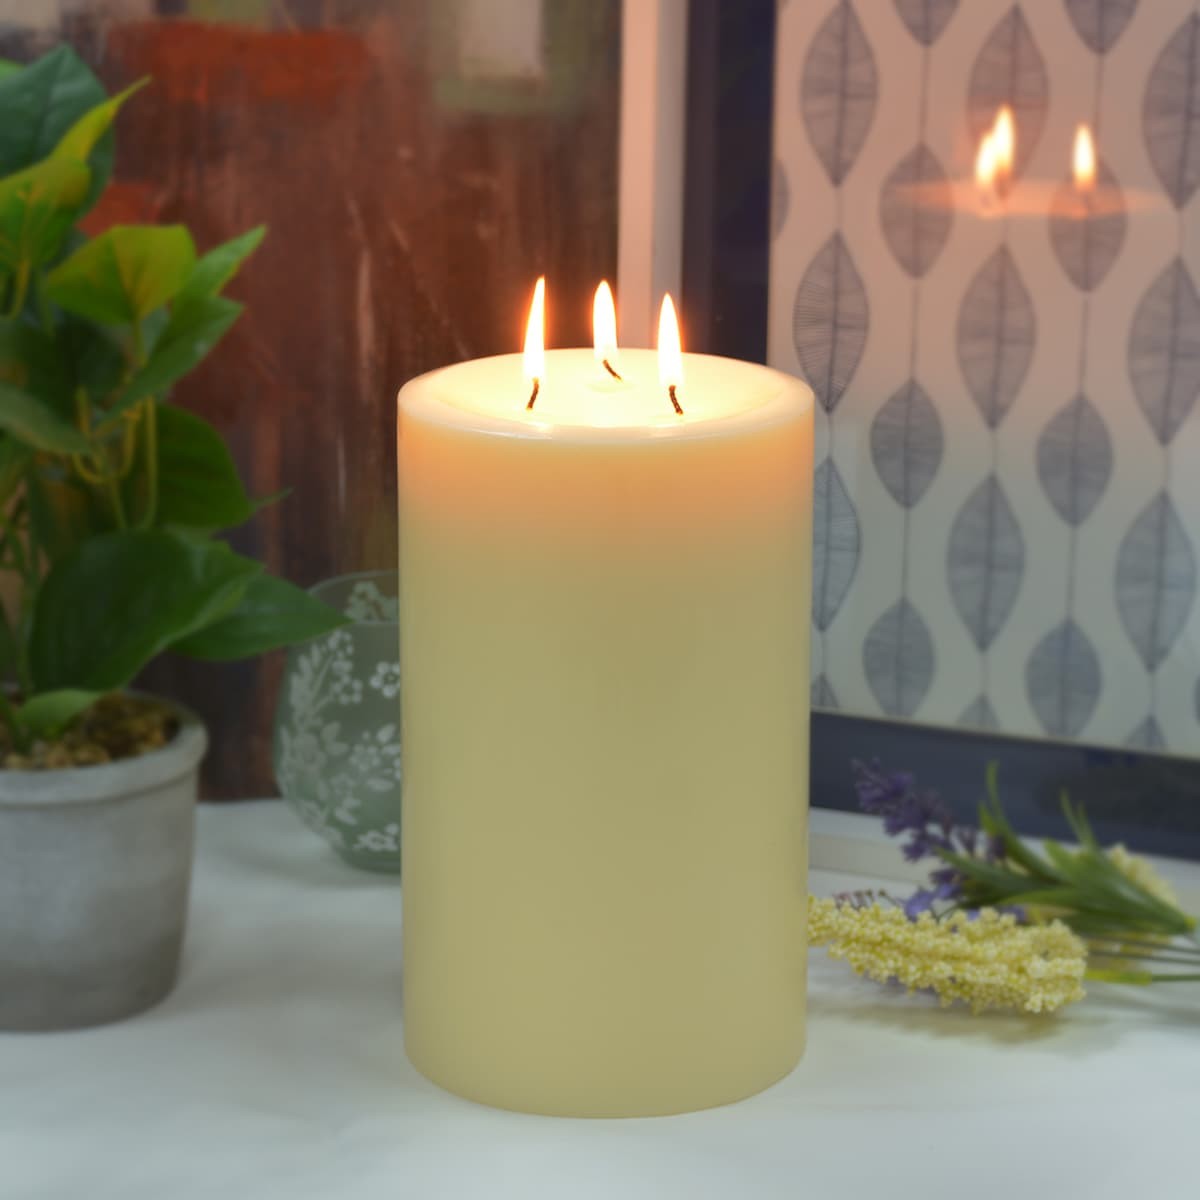 Jeco Inc. Glitter Pillar Candle, White